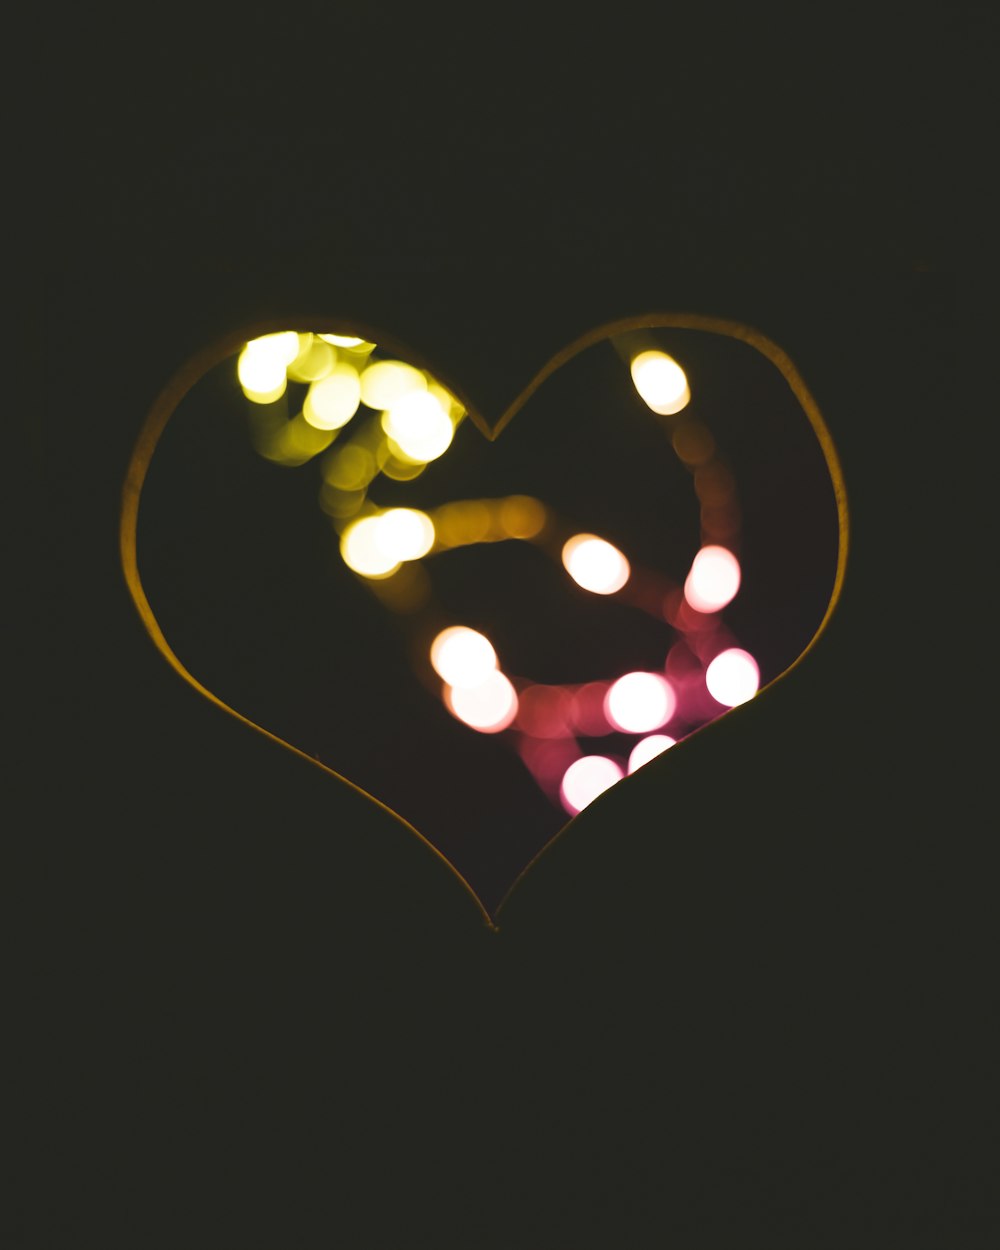 Black heart wallpaper photo – Free Light Image on Unsplash